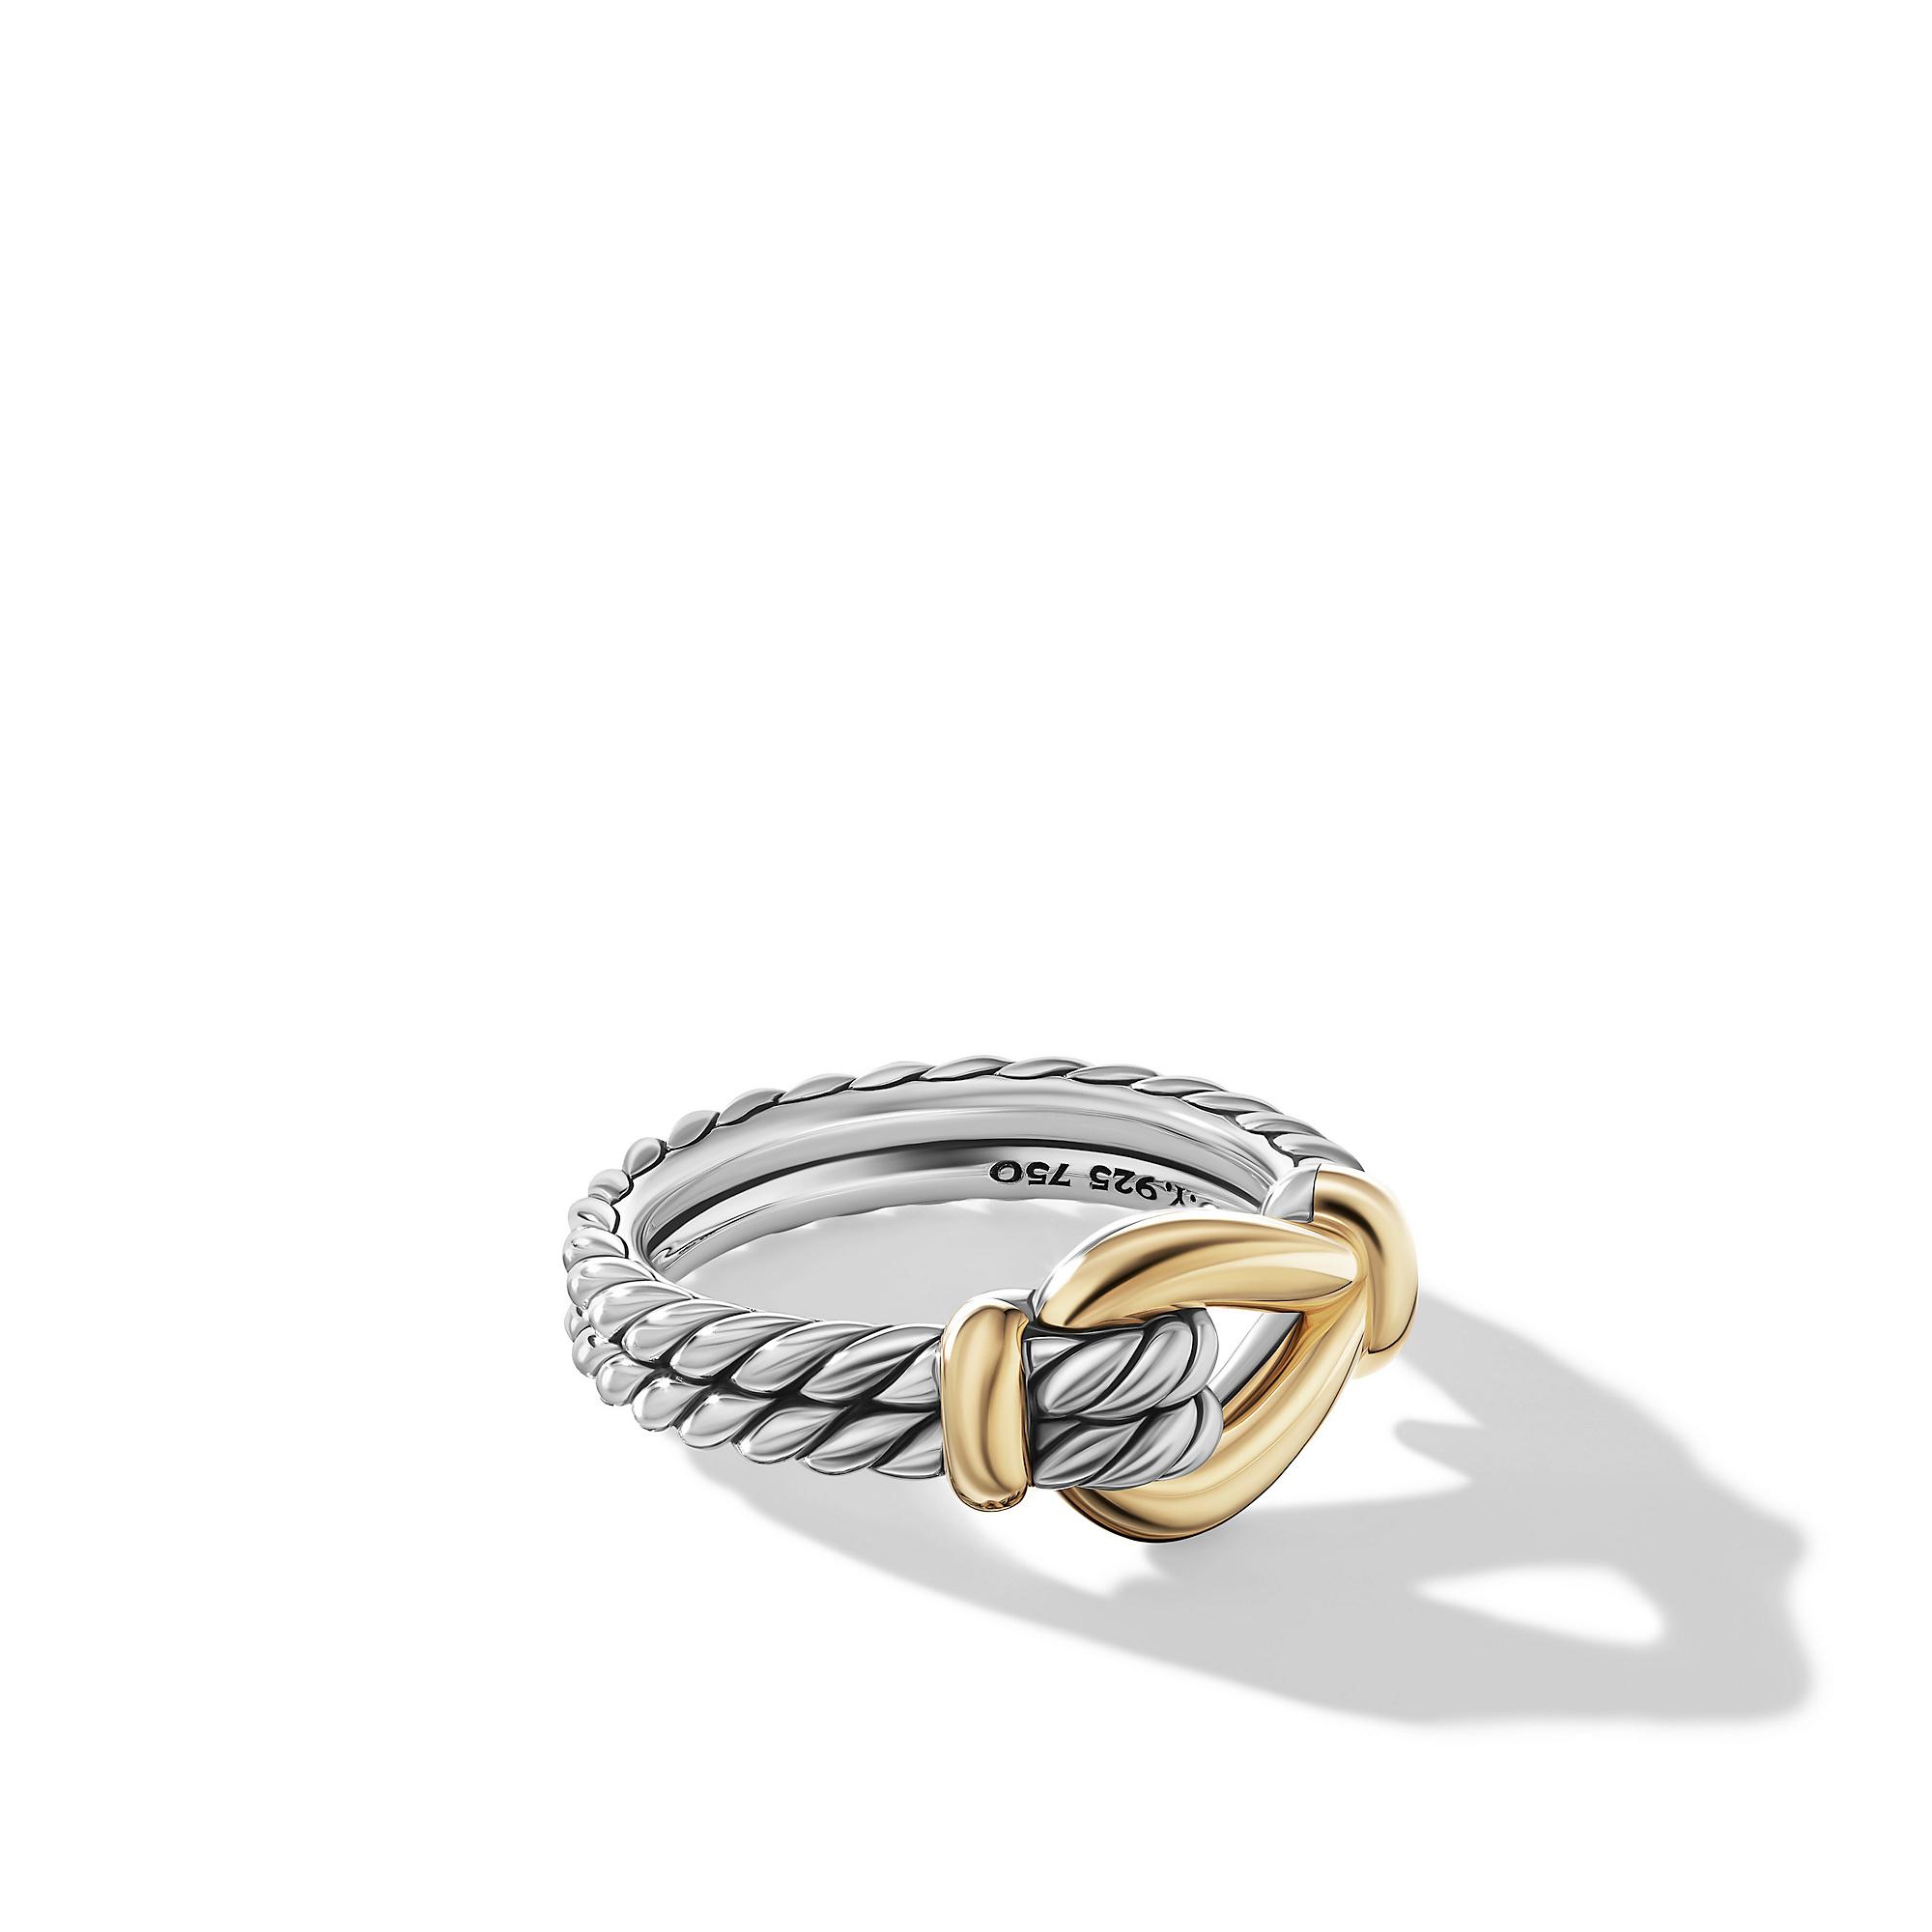 David Yurman Thoroughbred Loop Ring with 18k Yellow Gold, size 6.5